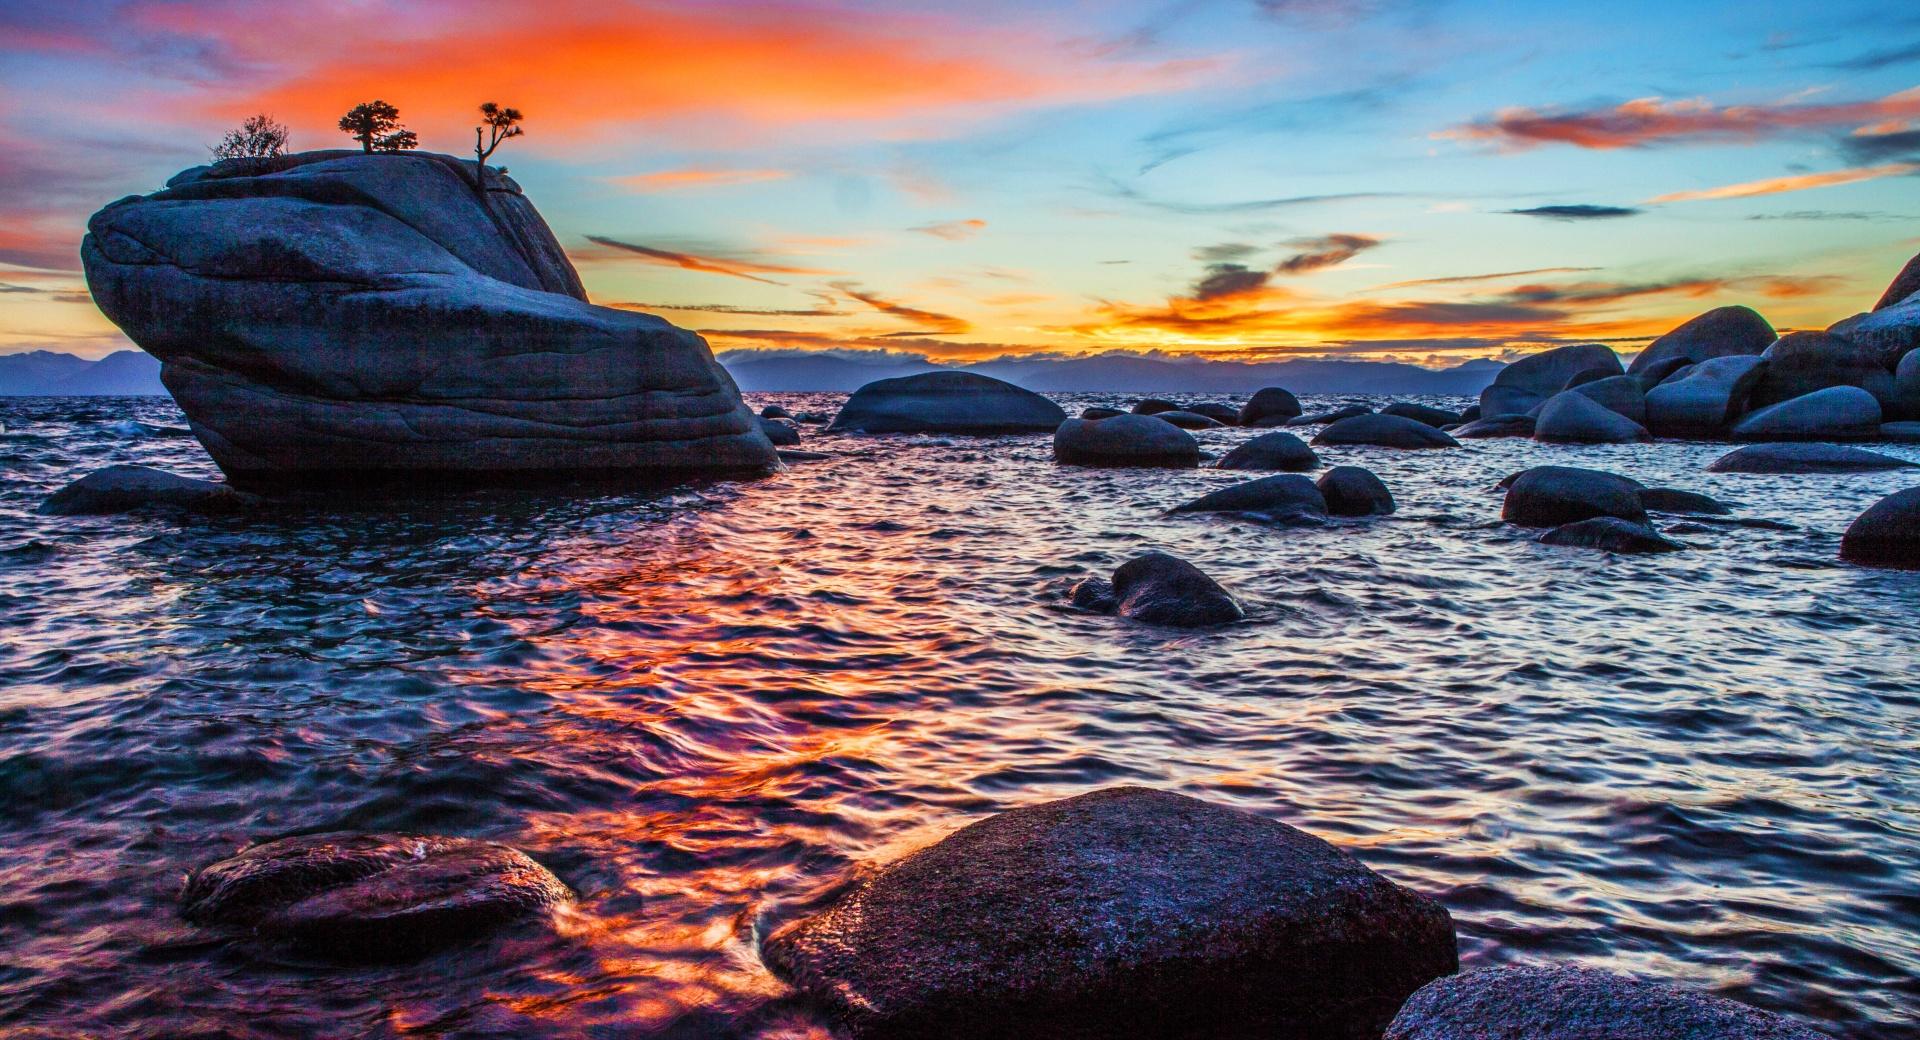 Bonsai Rock Sunset at Lake Tahoe at 1024 x 768 size wallpapers HD quality